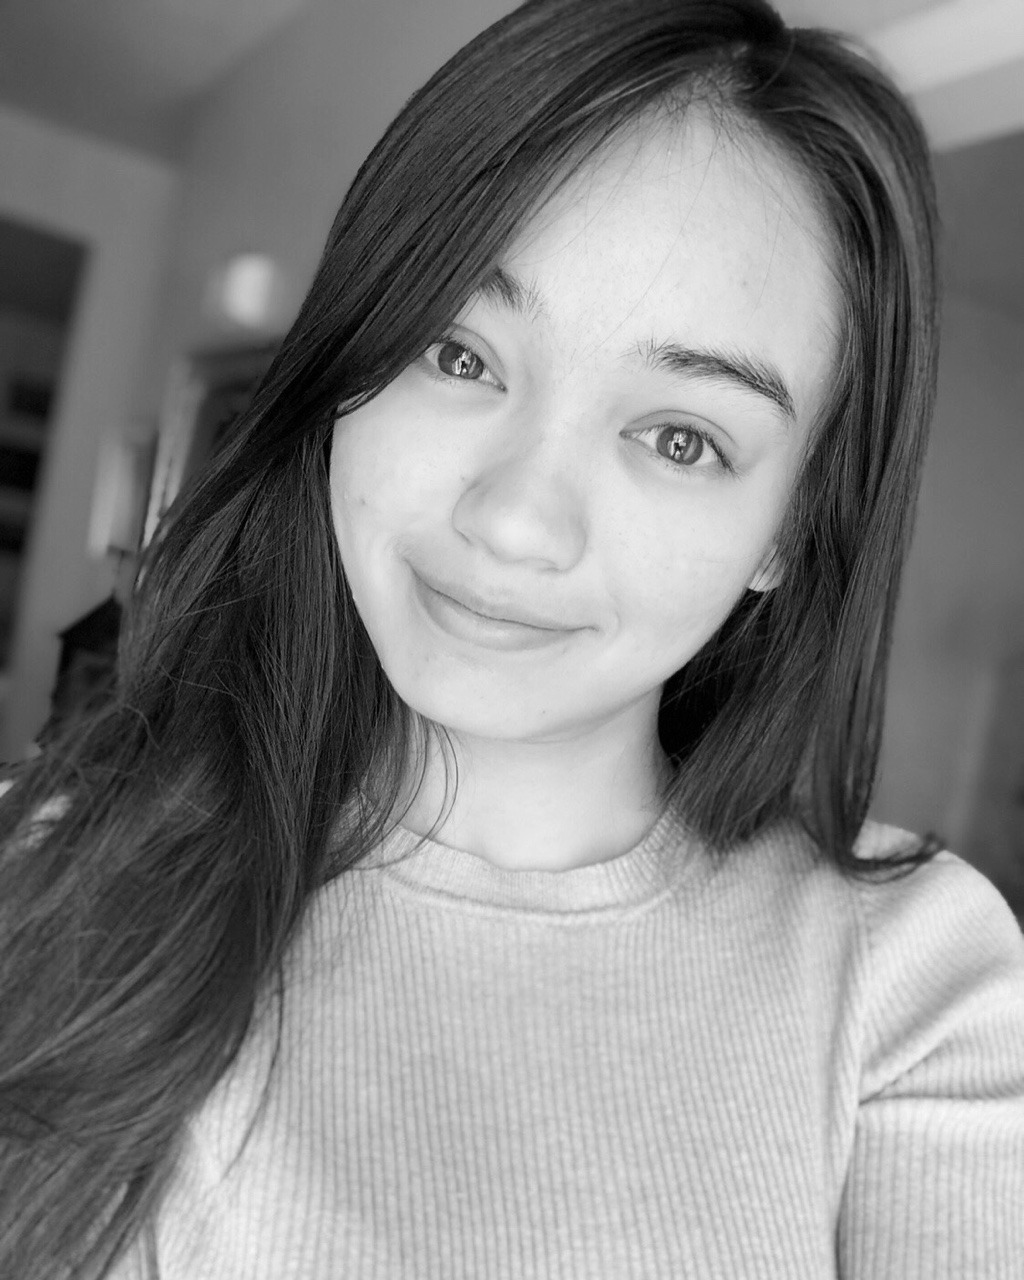 filipina girl selfie free pics